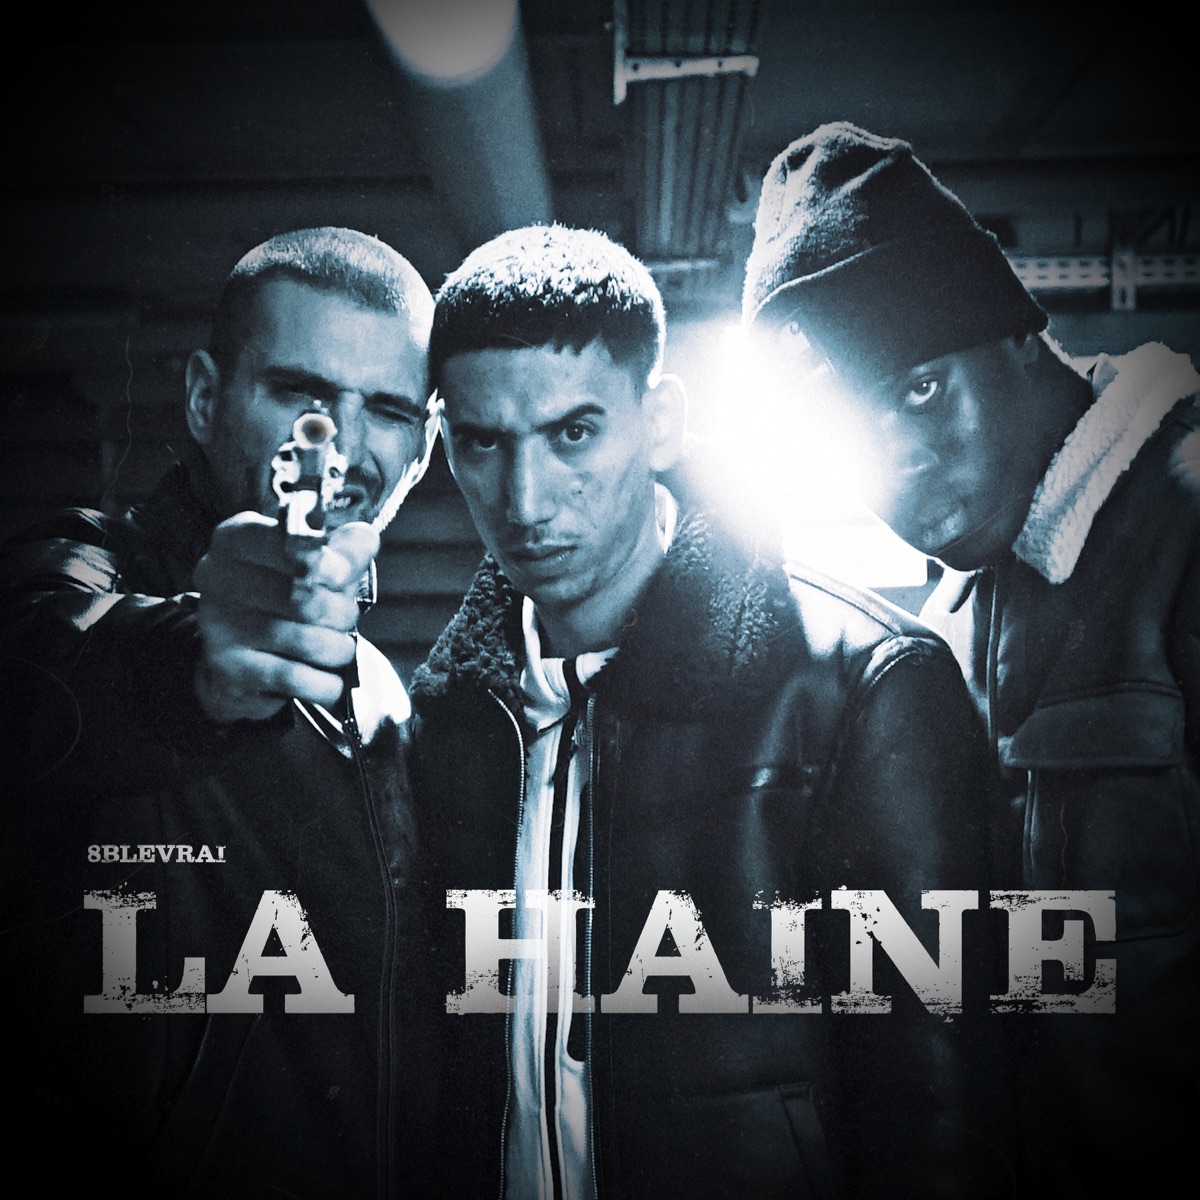 La Haine - Single - Album by 8blevrai - Apple Music